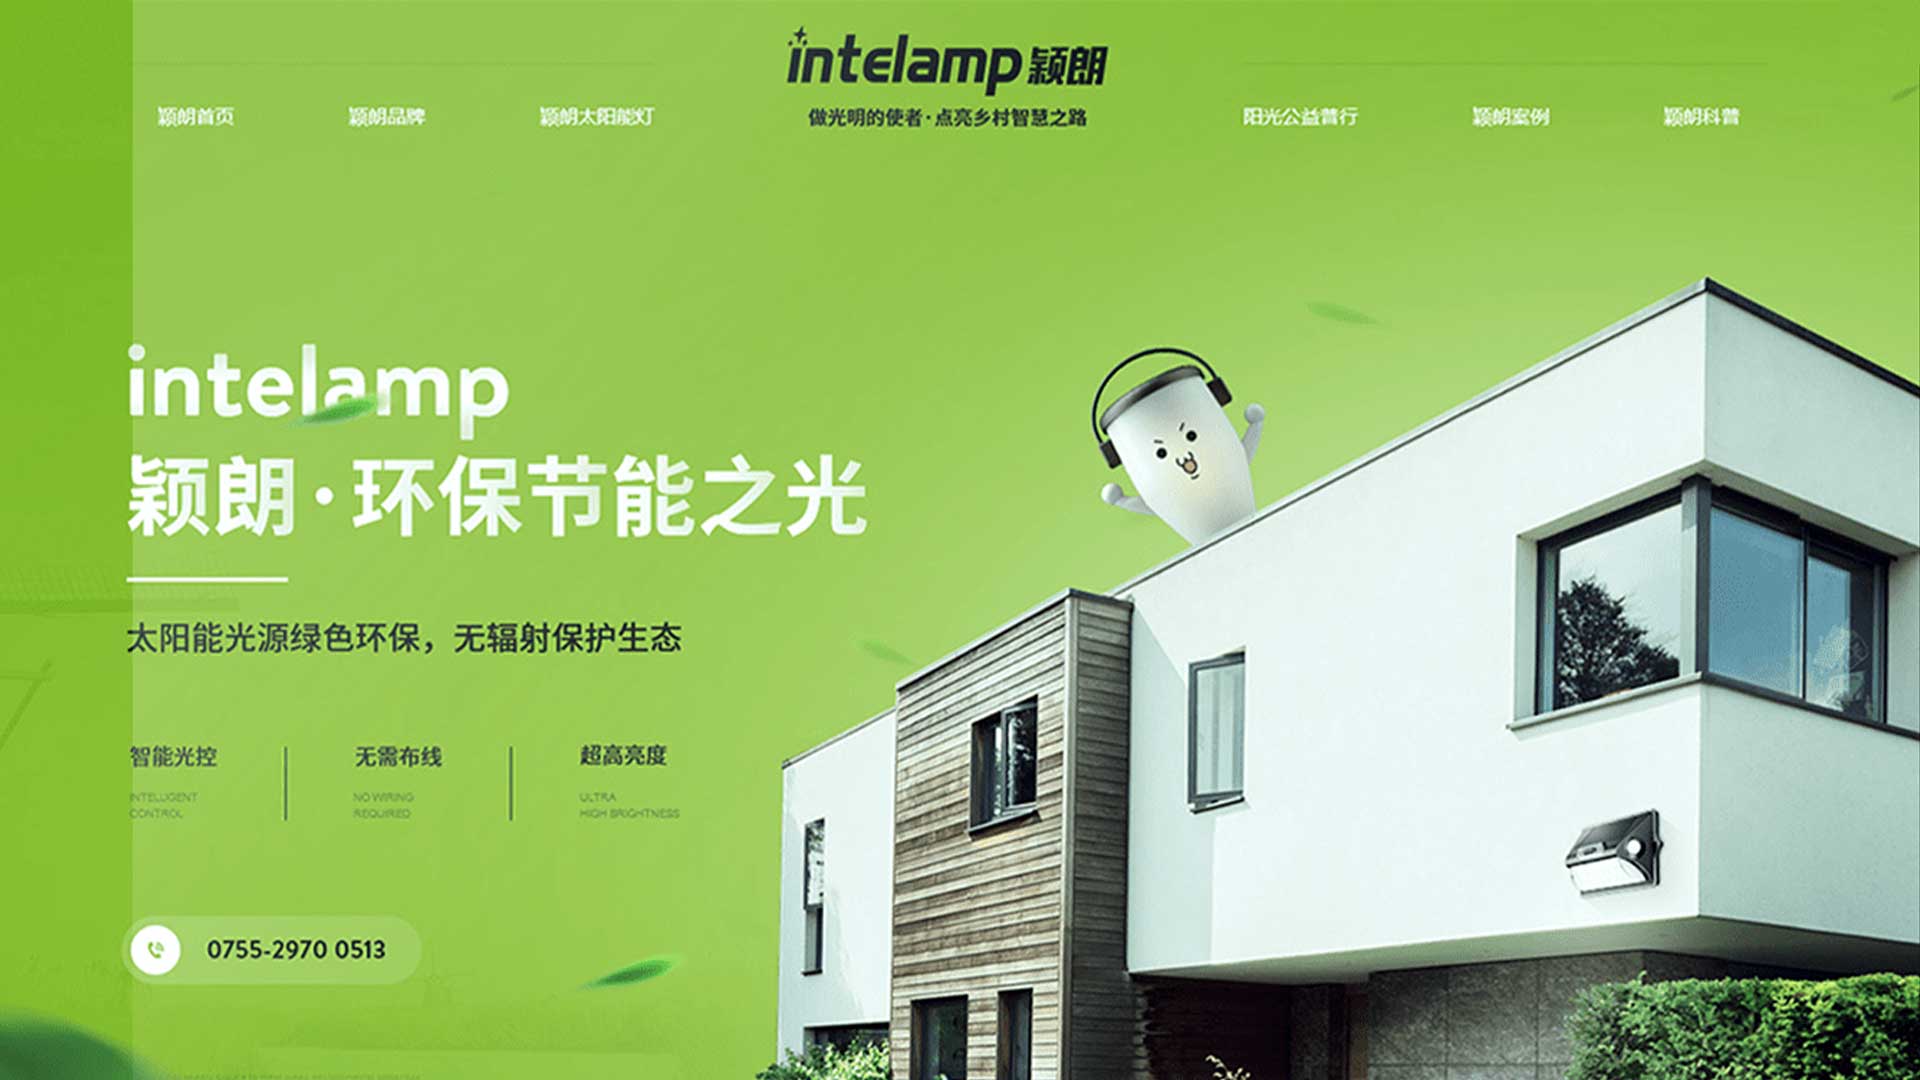 intelamp featured